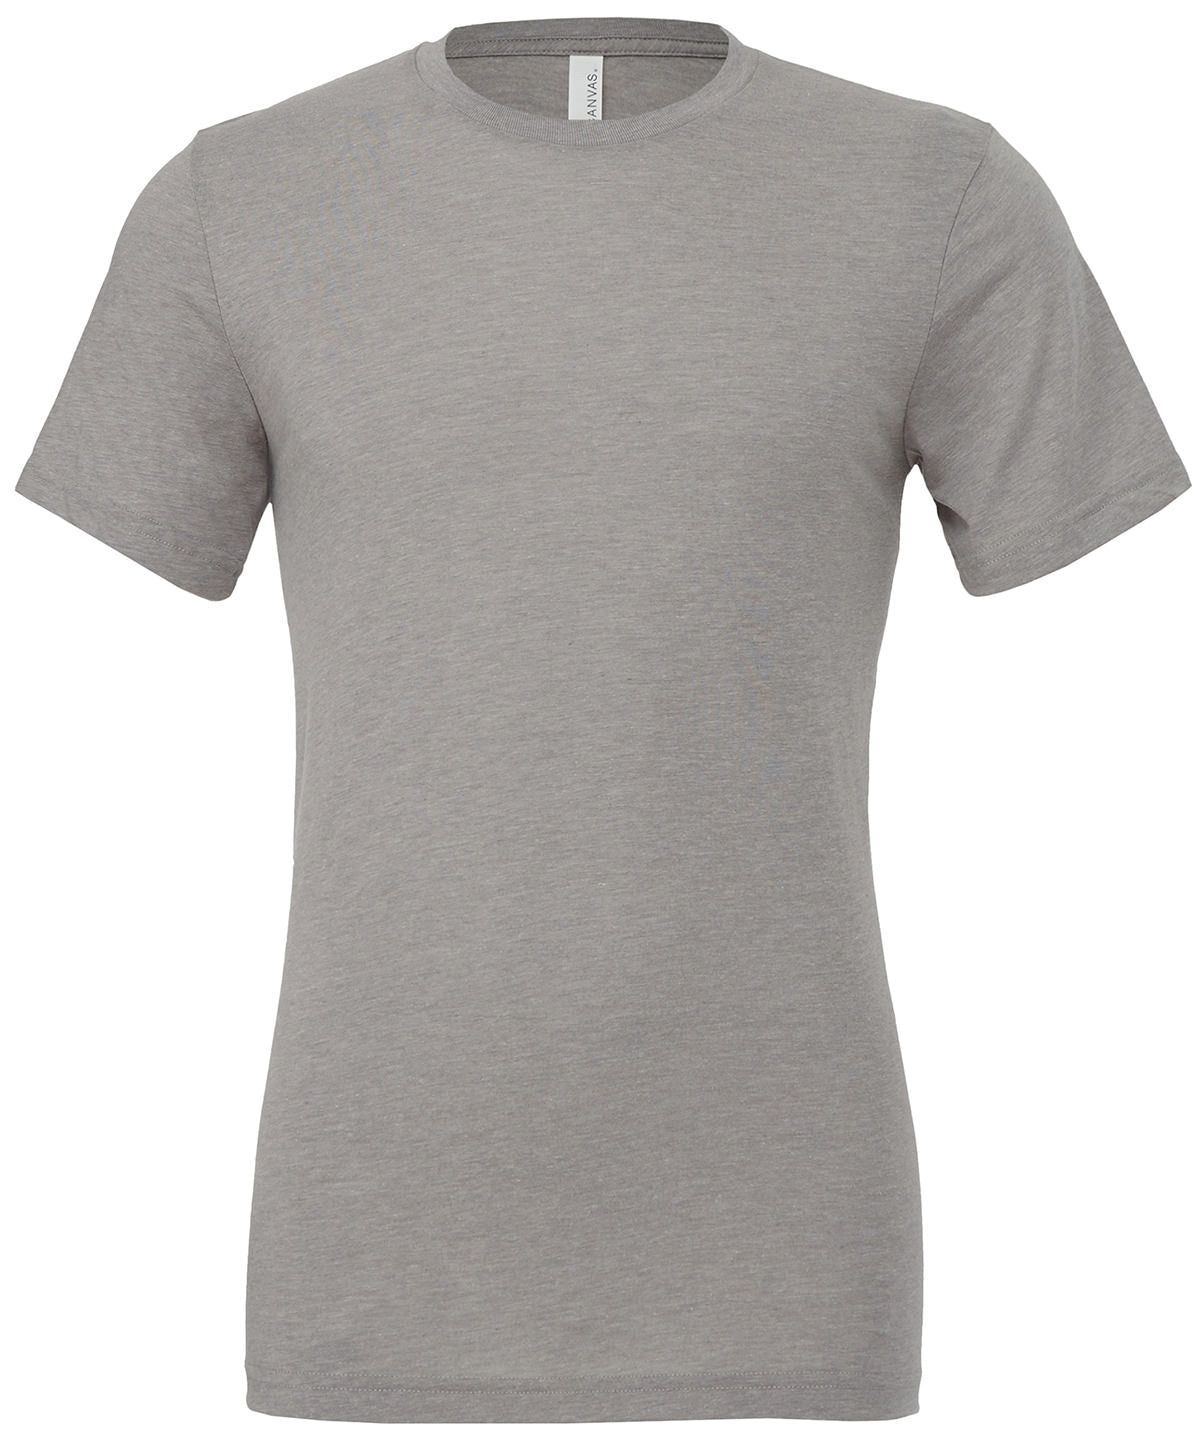 Bella Canvas Unisex Triblend Crew Neck T-Shirt - Athletic Grey Triblend